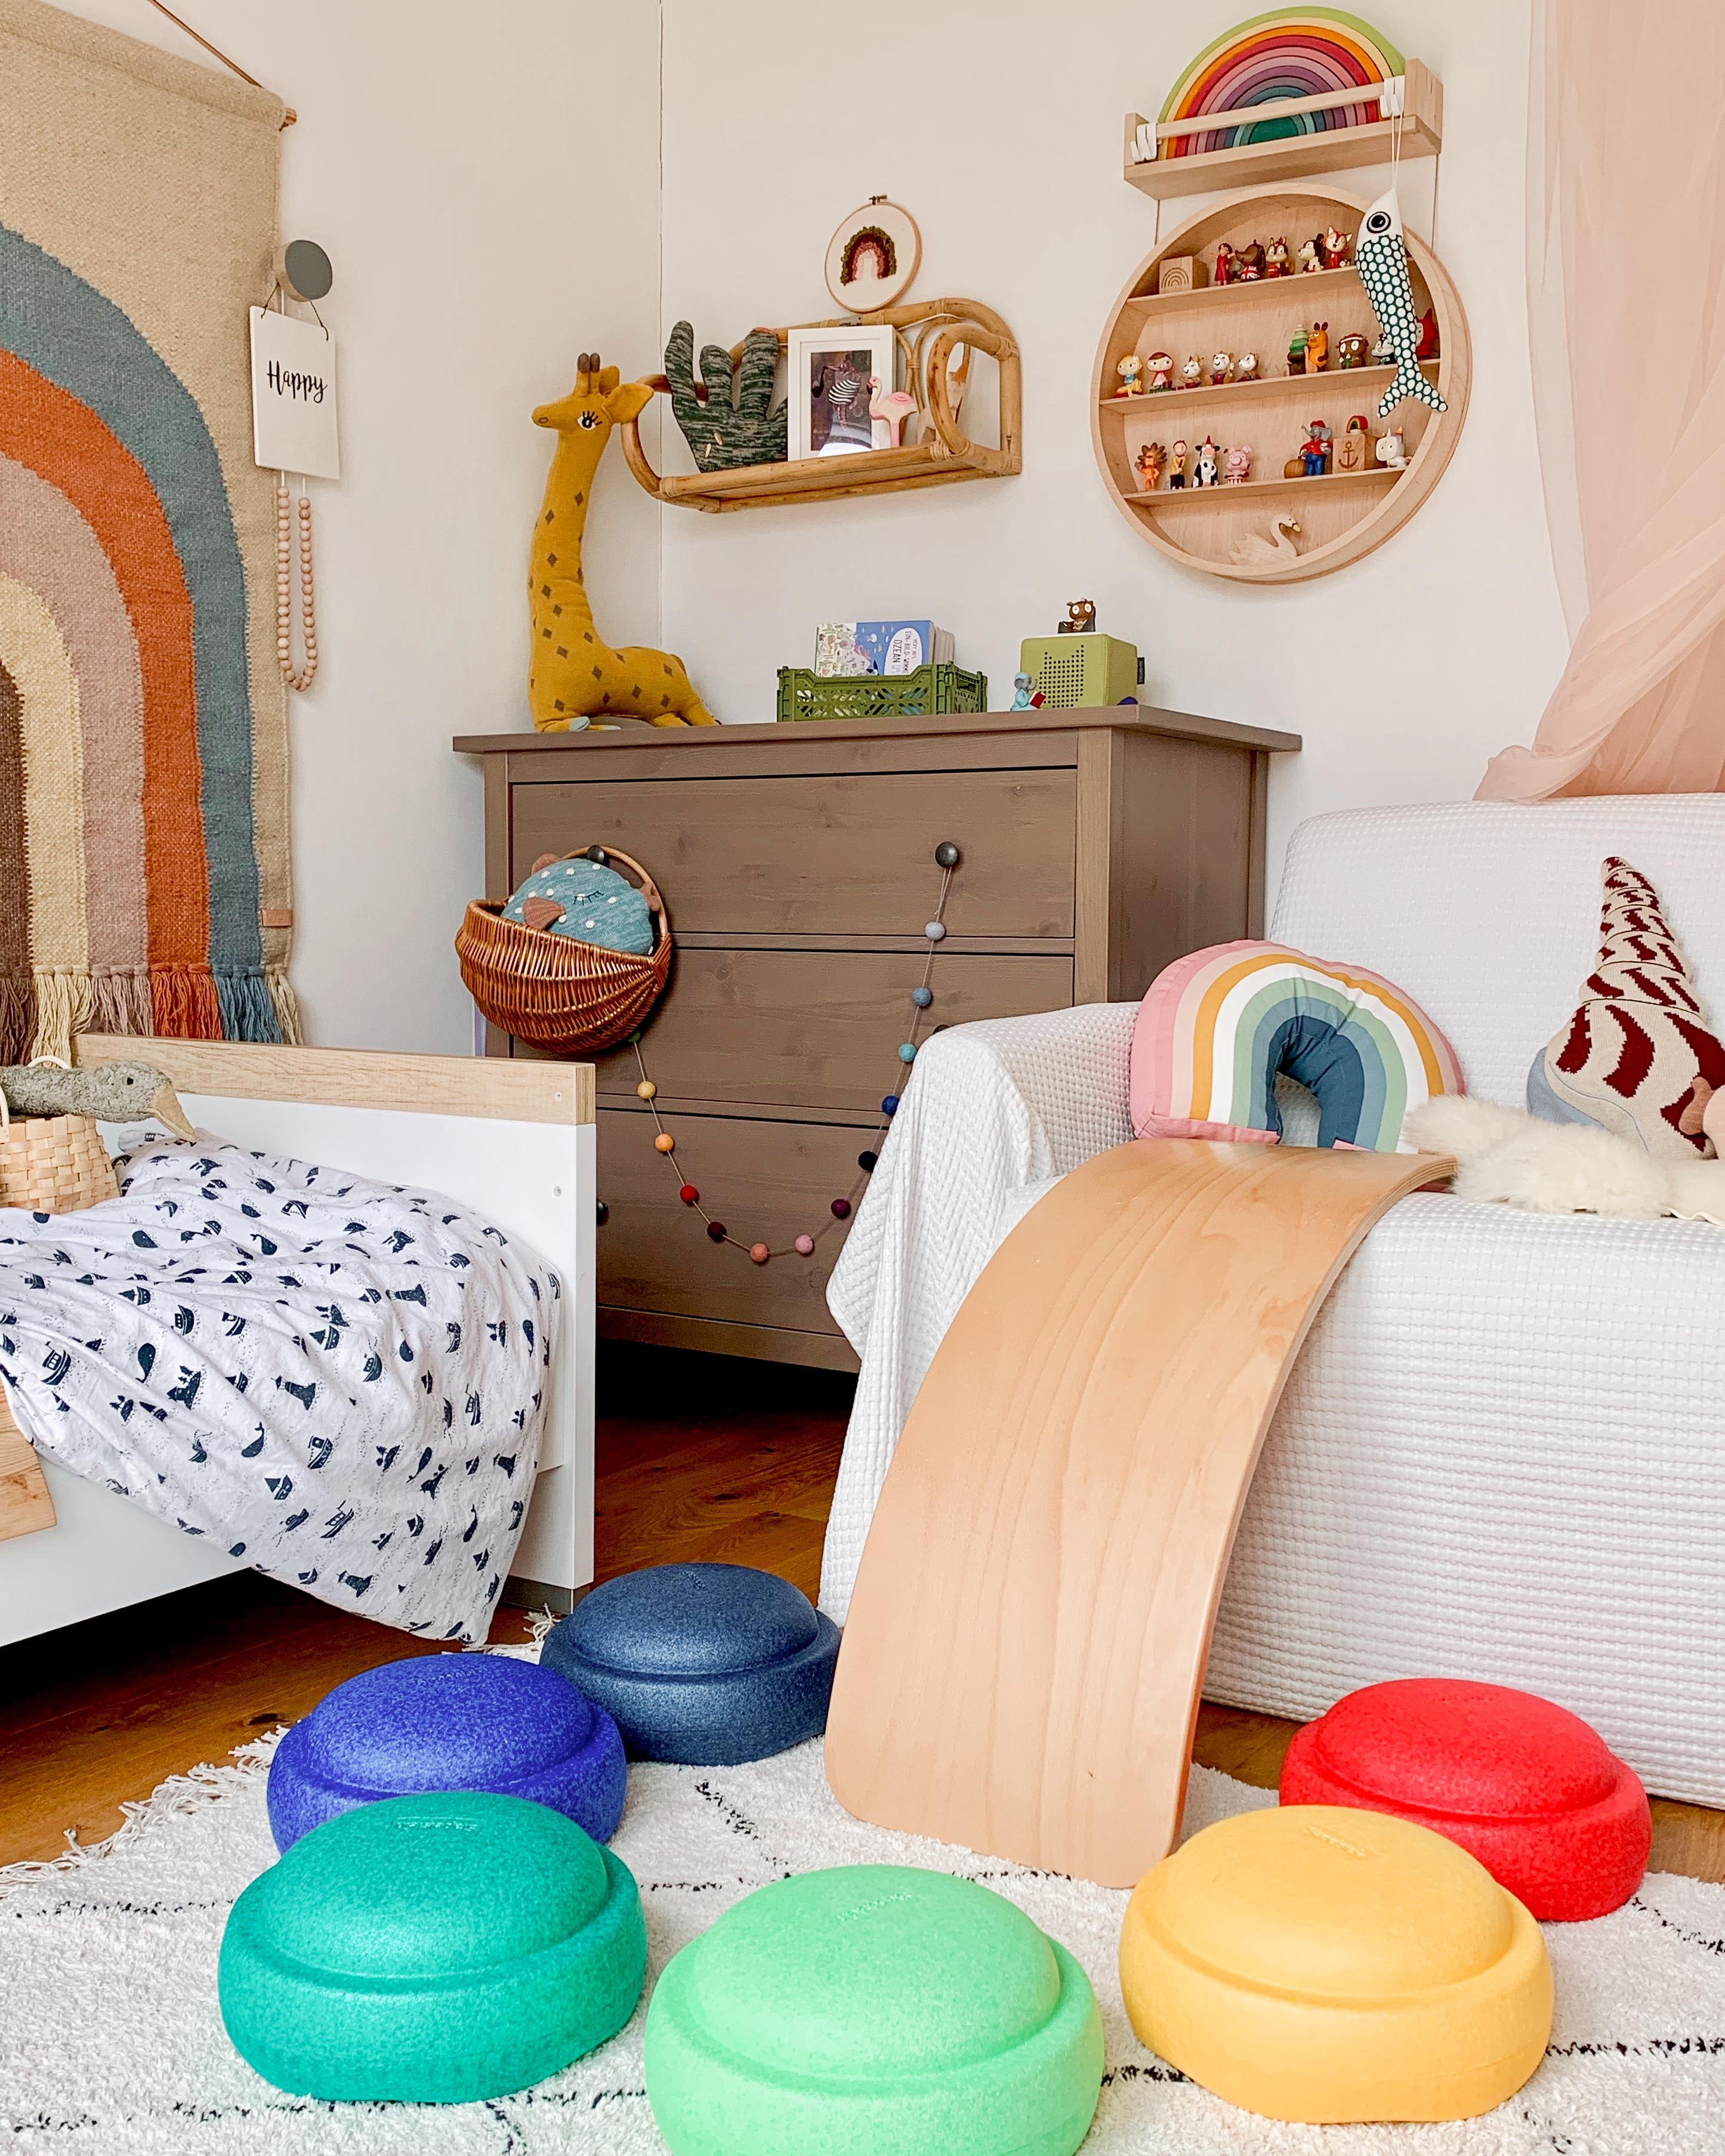 Farbenfrohes Kinderzimmer ...
#kinderzimmer #kidsroom #kidsroominspo